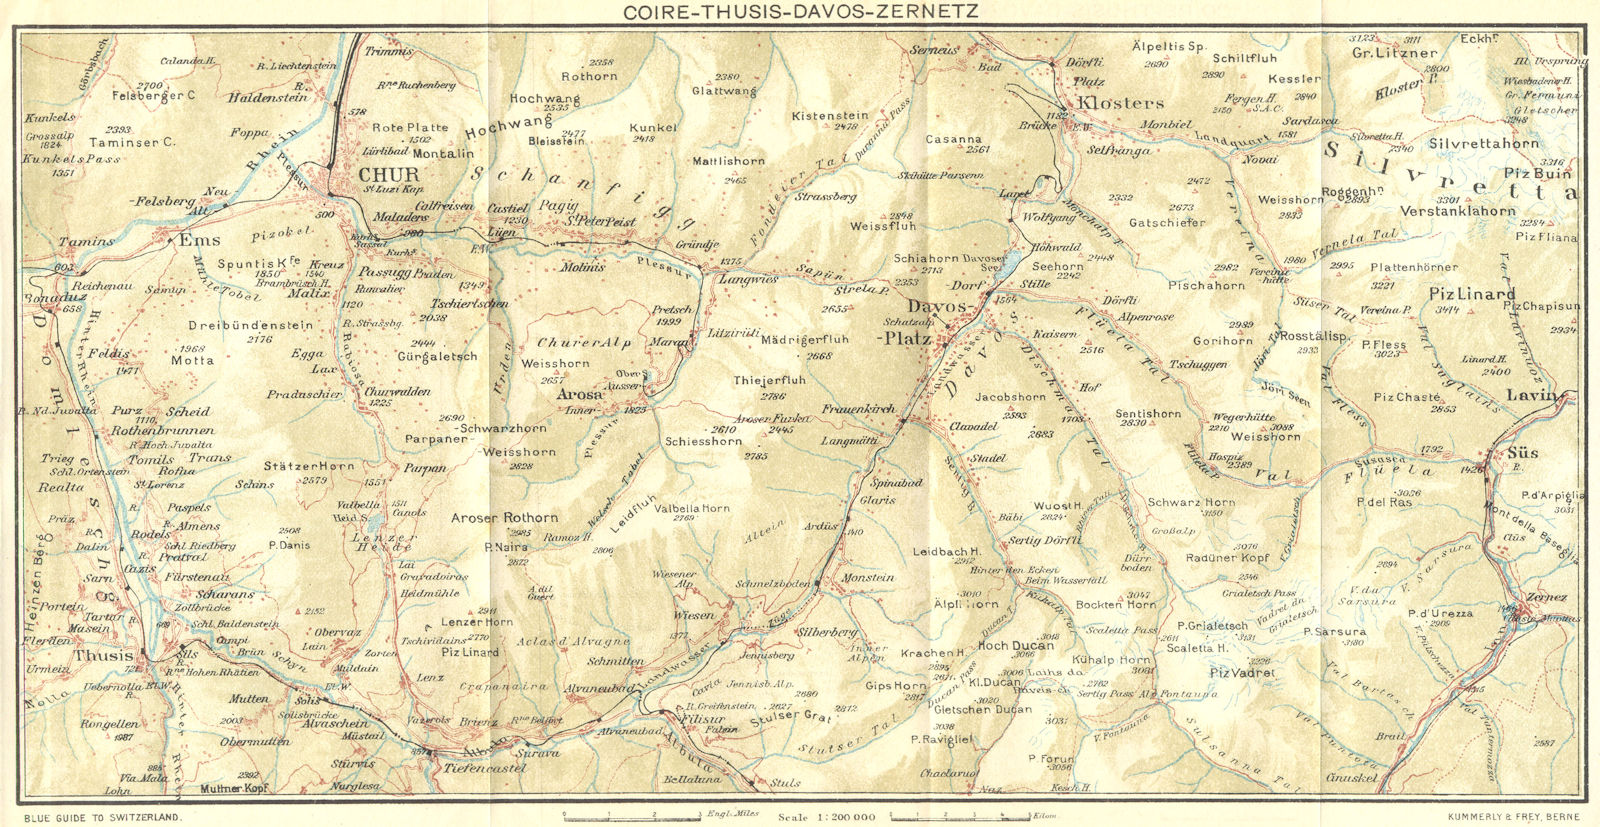 SWITZERLAND. Coire-Thusis-Davos-Zernetz 1923 old antique map plan chart